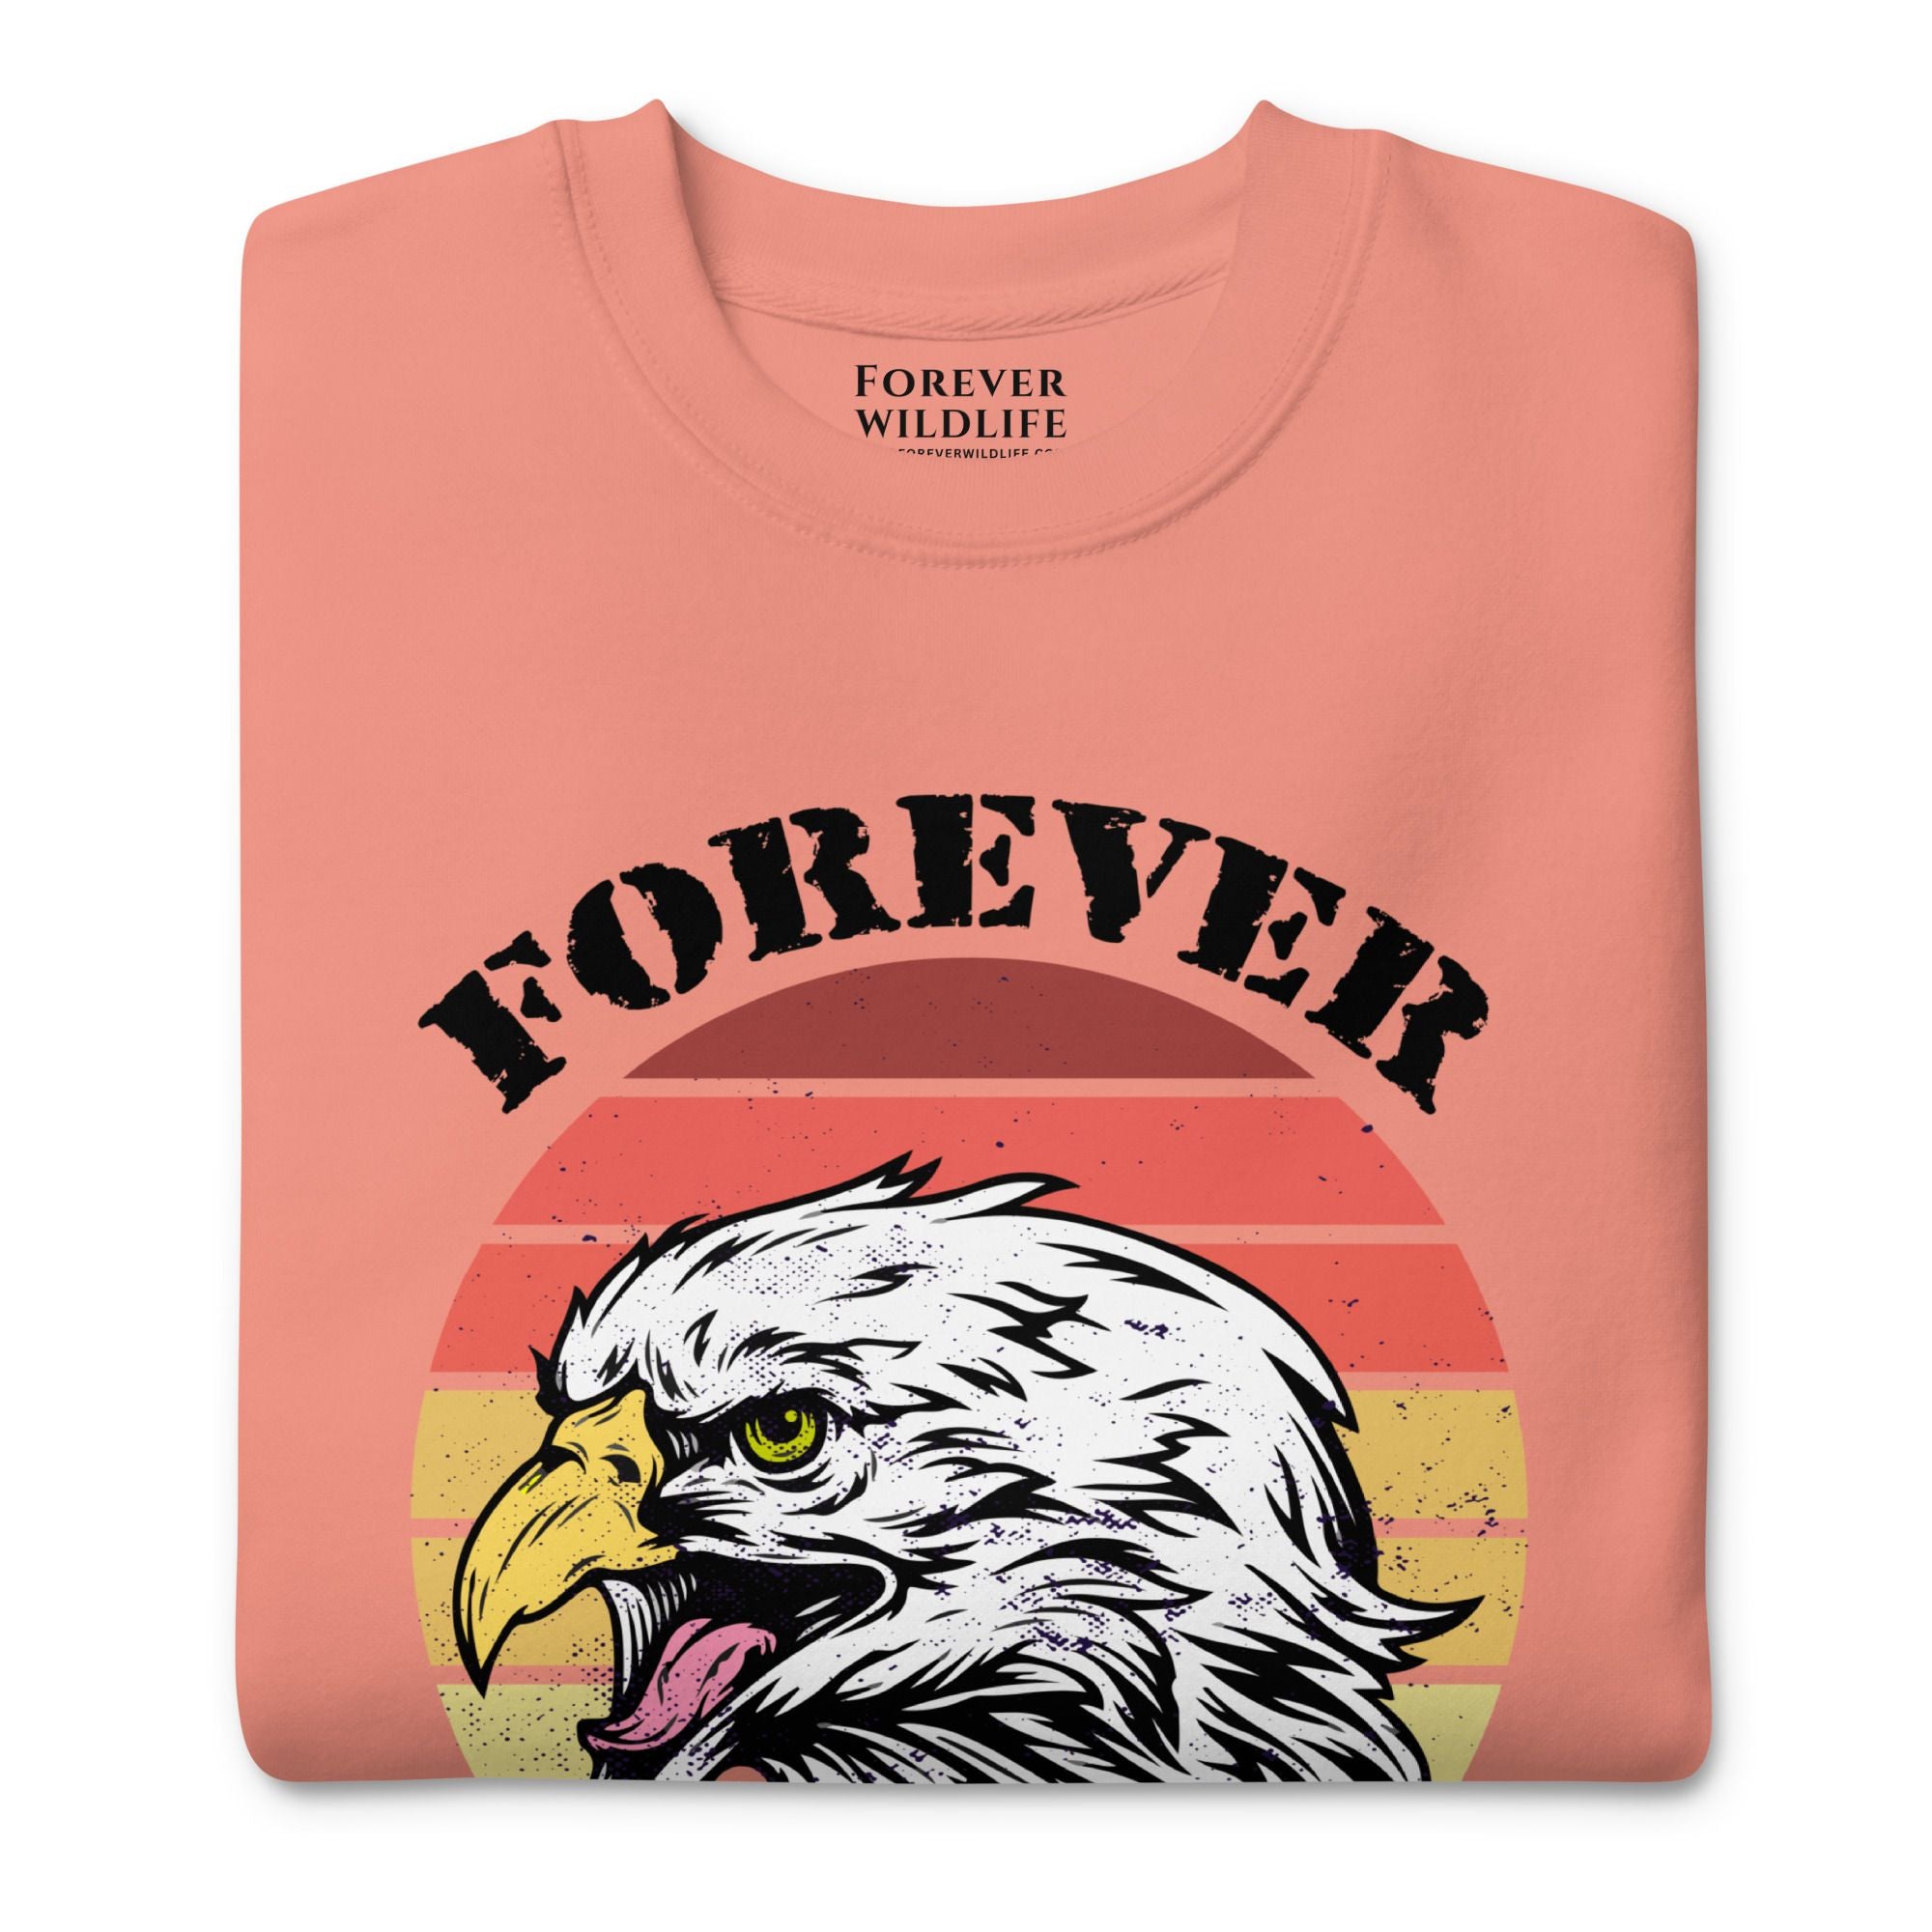 Eagle Sweatshirt in Rose-Premium Wildlife Animal Inspiration Sweatshirt Design, part of Wildlife Sweatshirts & Clothing from Forever Wildlife.